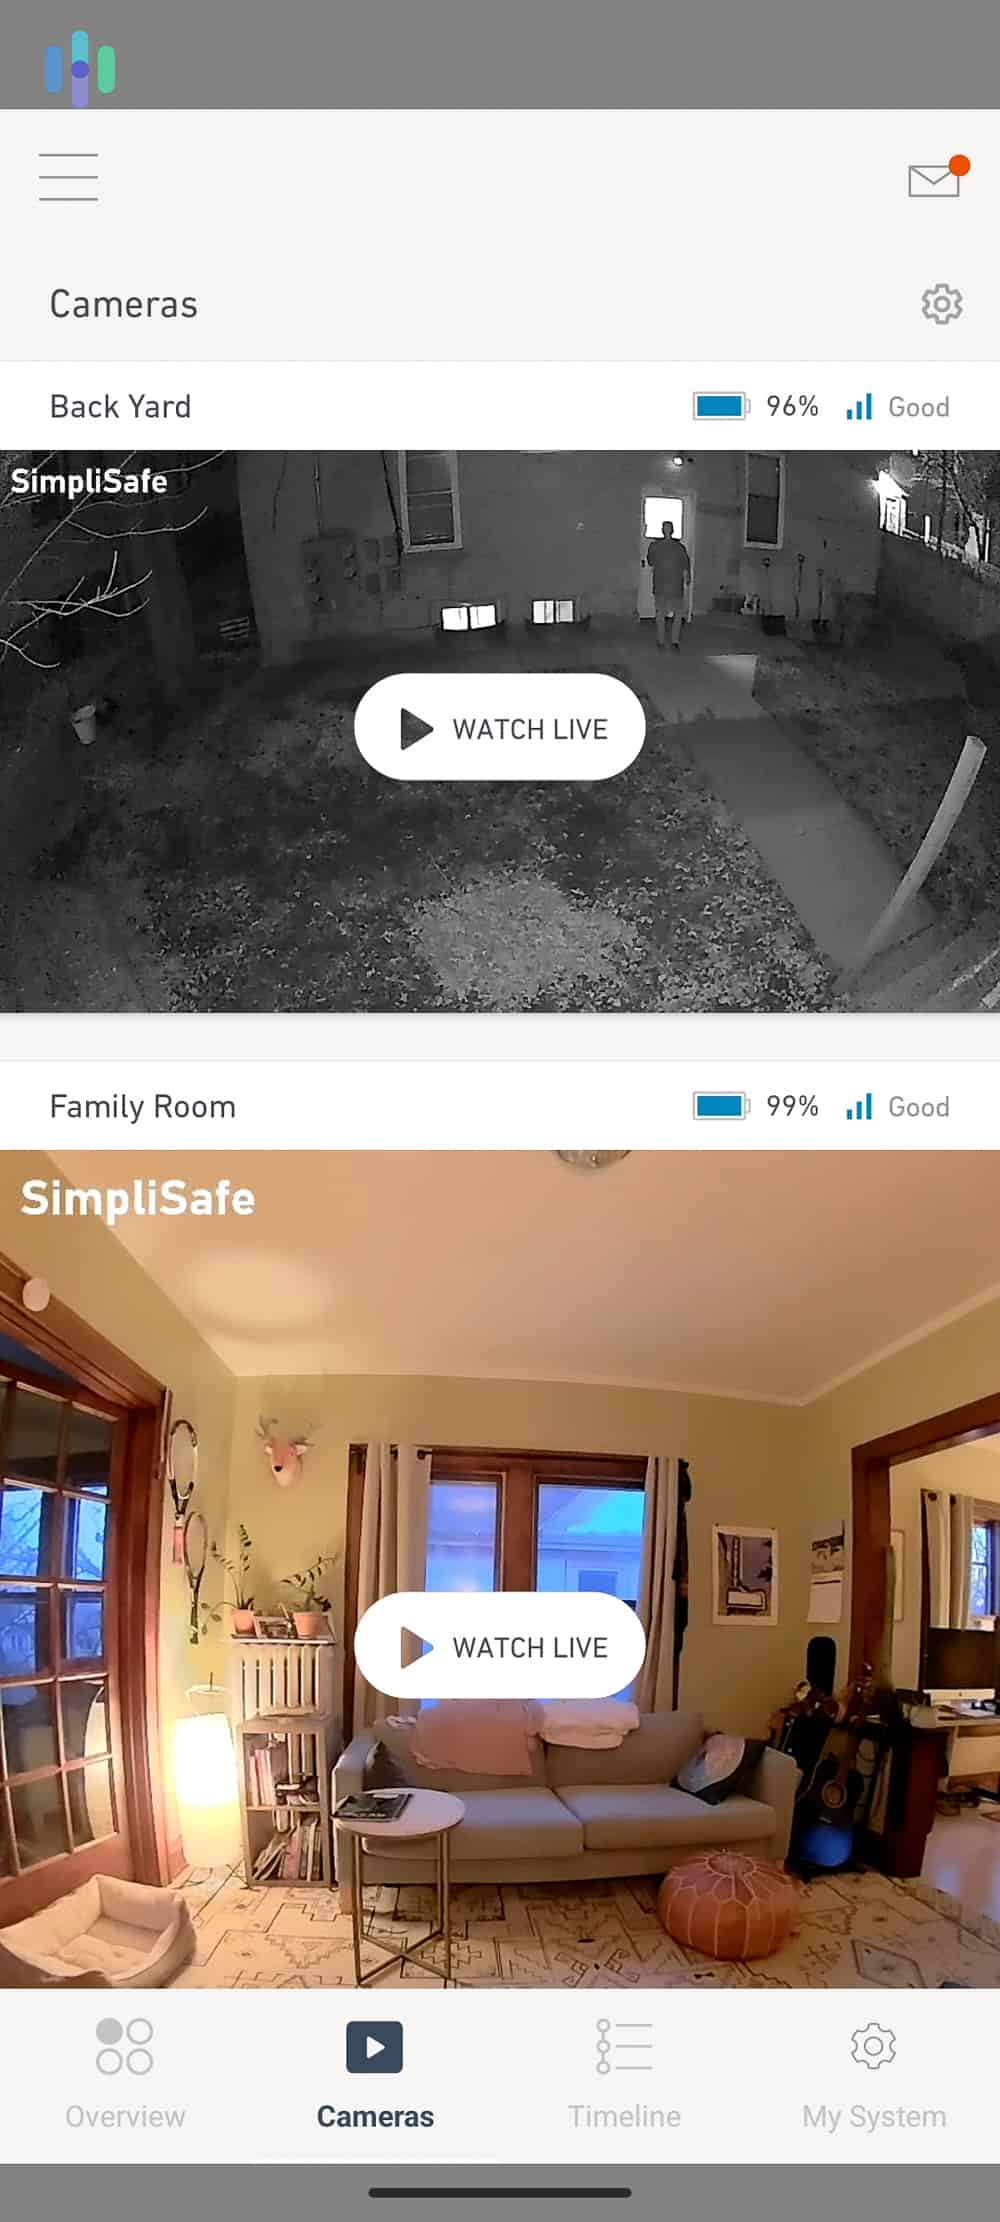 Cameras on the SimpliSafe app